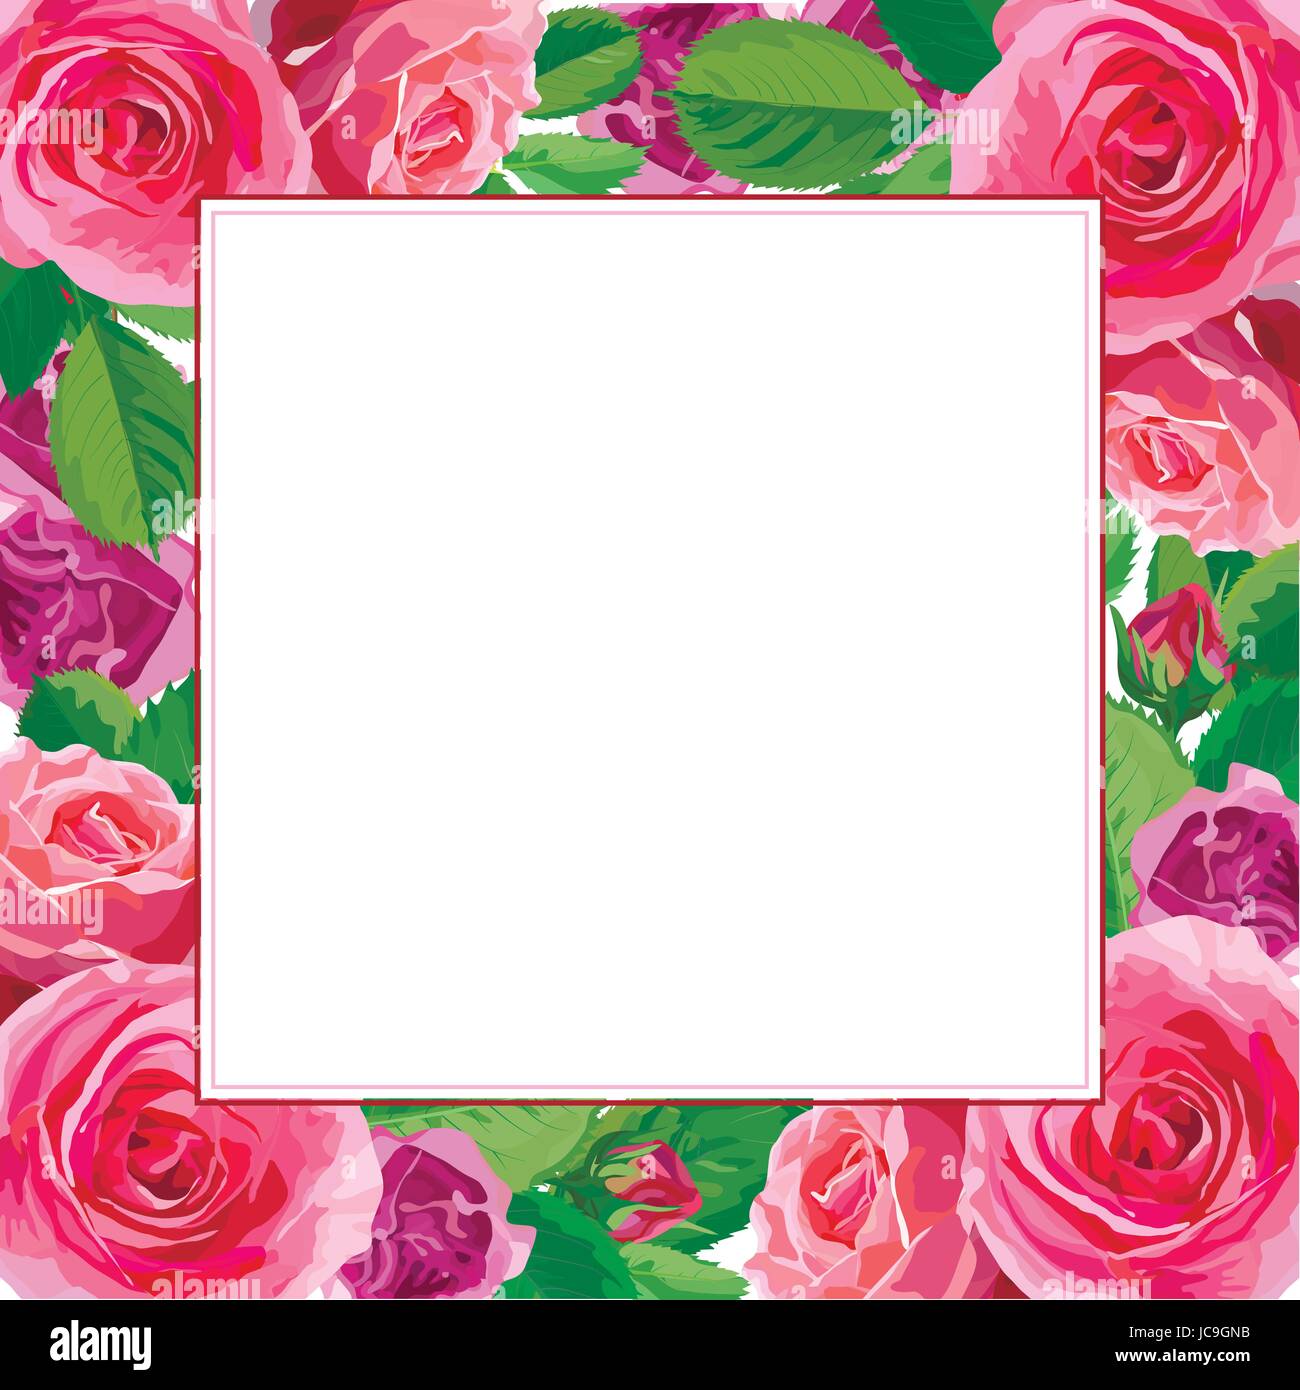 Blüte rosa blühende Blumen, die schönen schönen Frühling Sommer Bouquet Vektor-Illustration Rosenblätter. Draufsicht quadratisch elegant Aquarell Frame Design w Stock Vektor